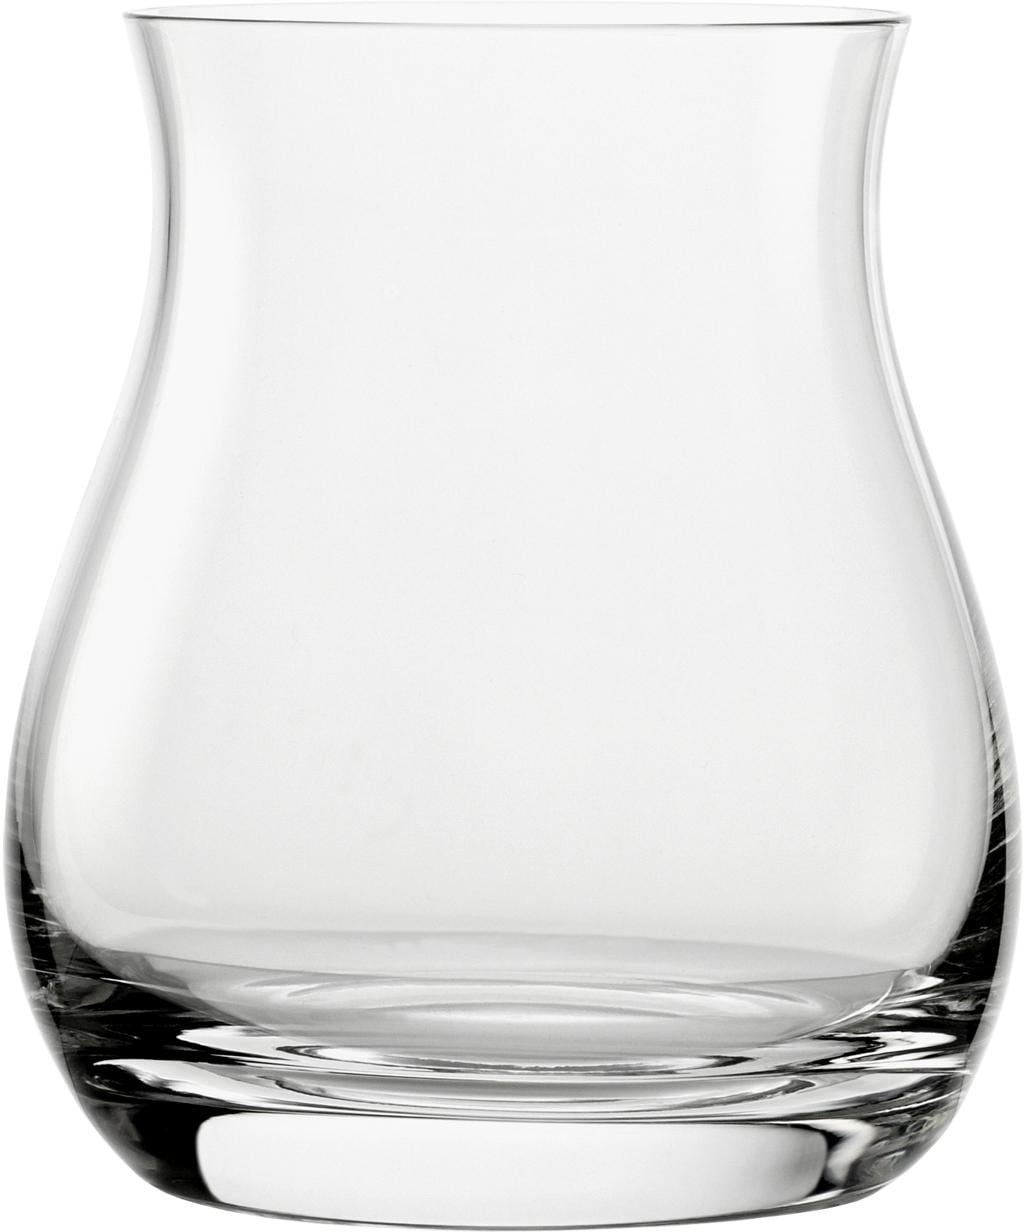 Stölzle Whiskyglas »Canadian Whisky«, (Set, 6 tlg.), 6-teilig